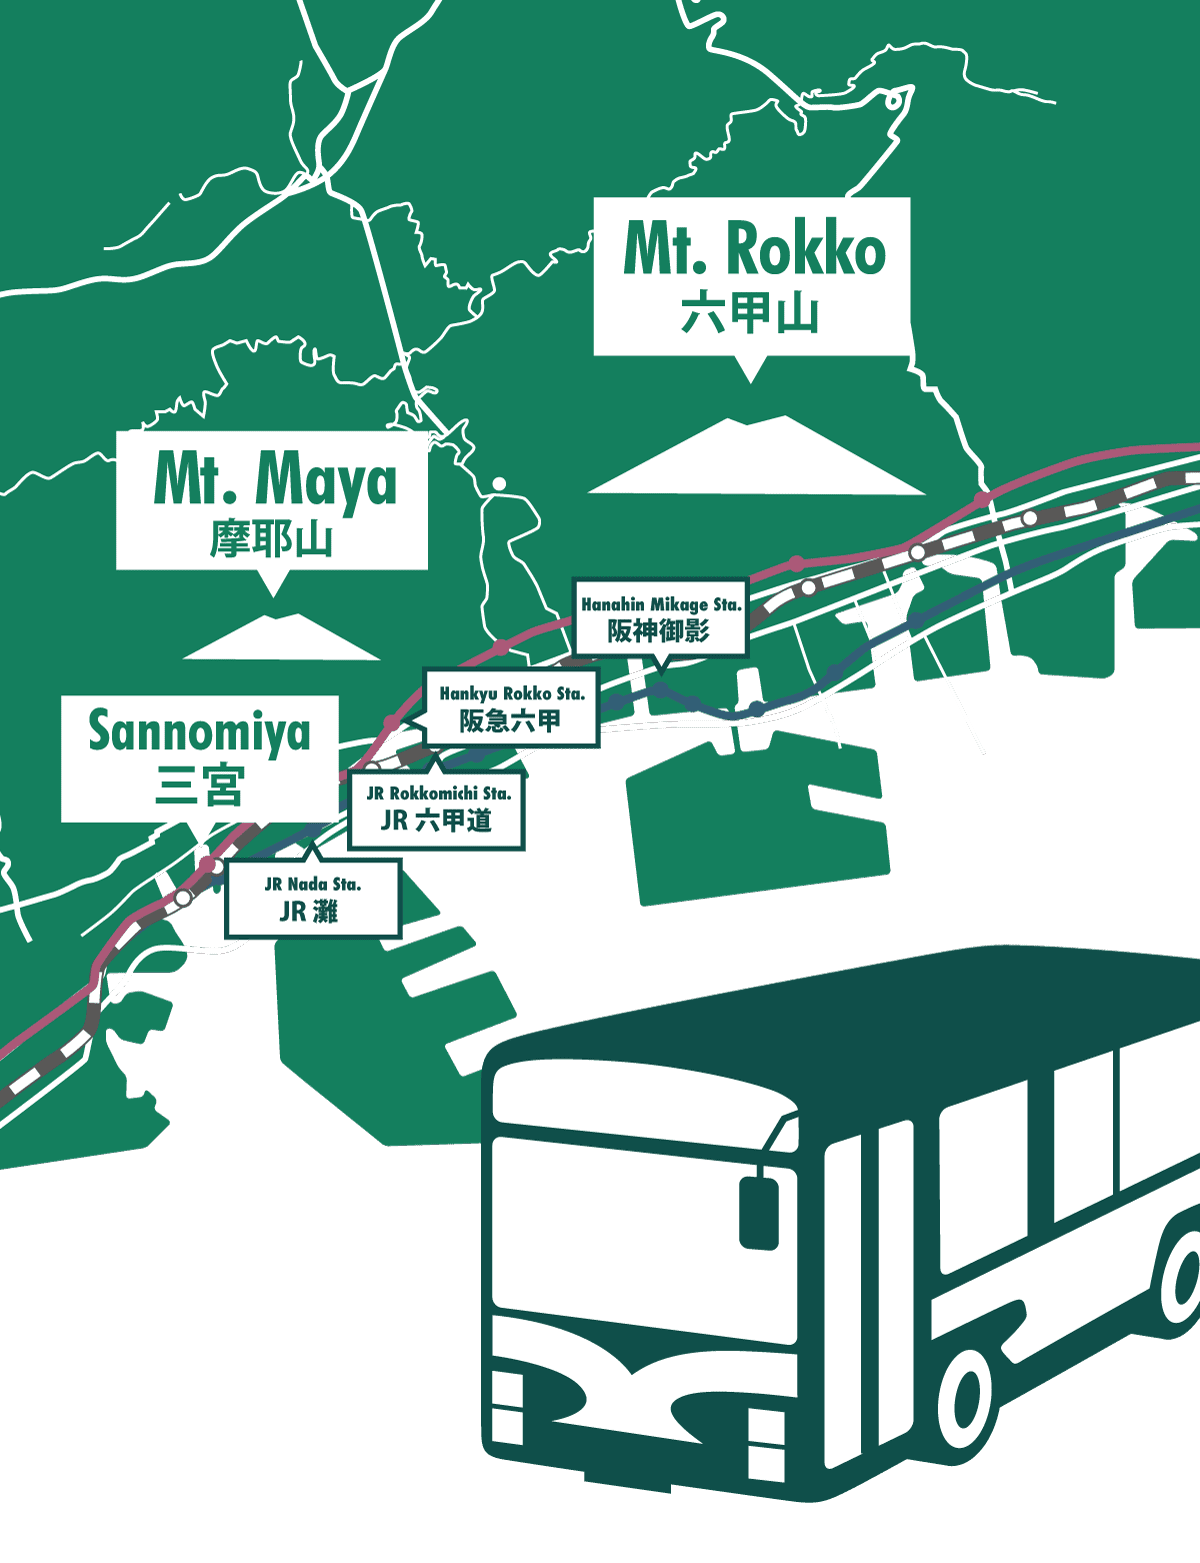 You can easily access Rokko and Maya via ocal bus!